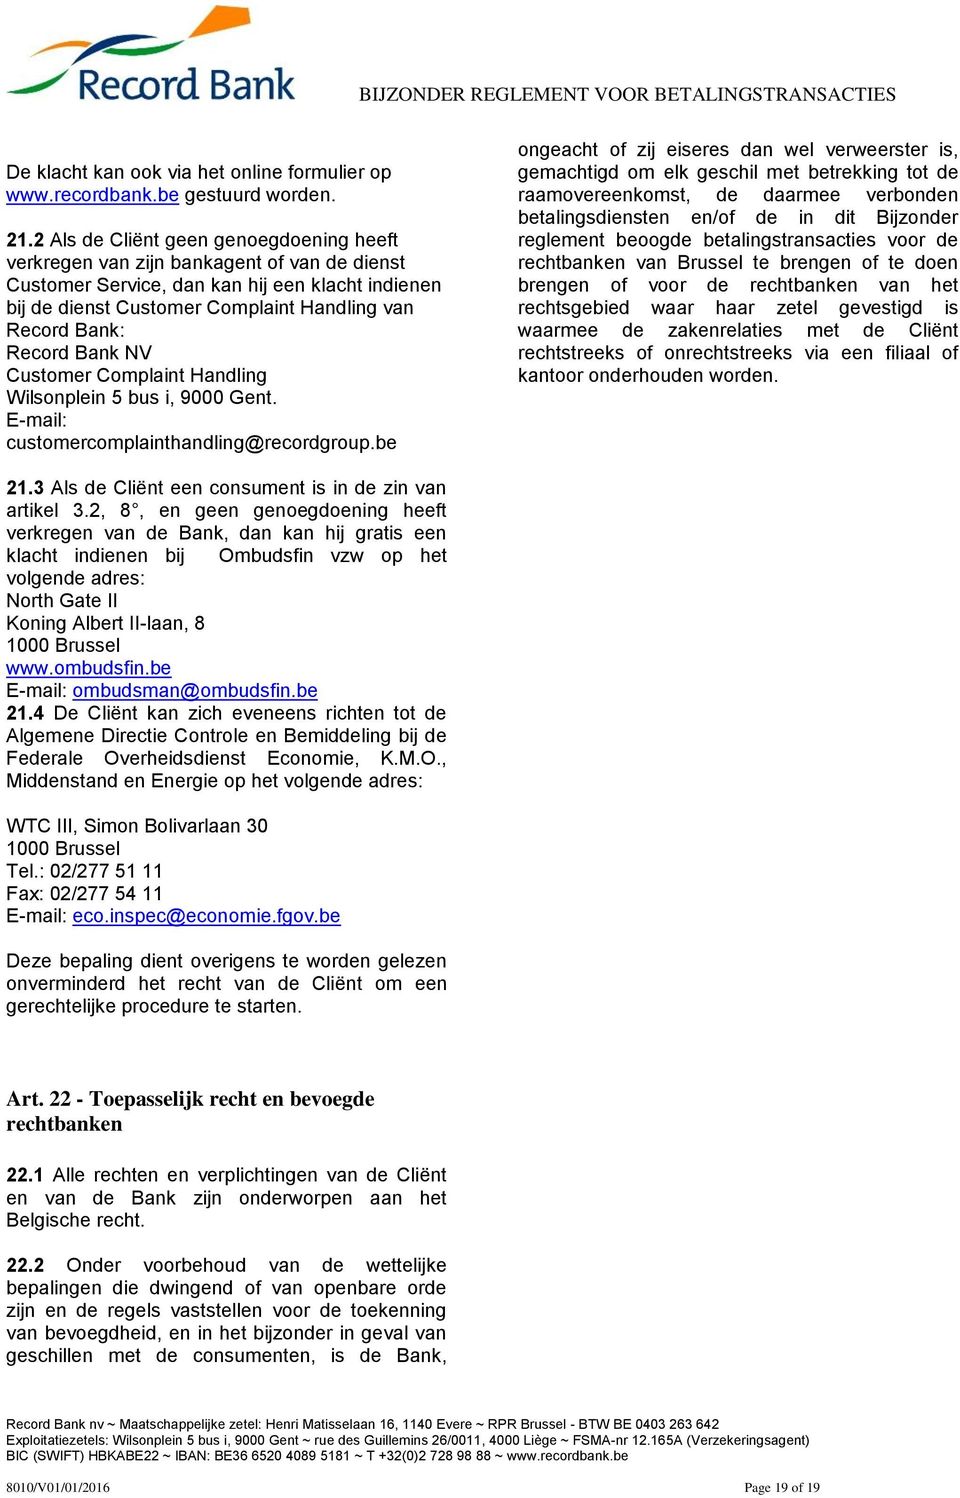 Record Bank NV Customer Complaint Handling Wilsonplein 5 bus i, 9000 Gent. E-mail: customercomplainthandling@recordgroup.